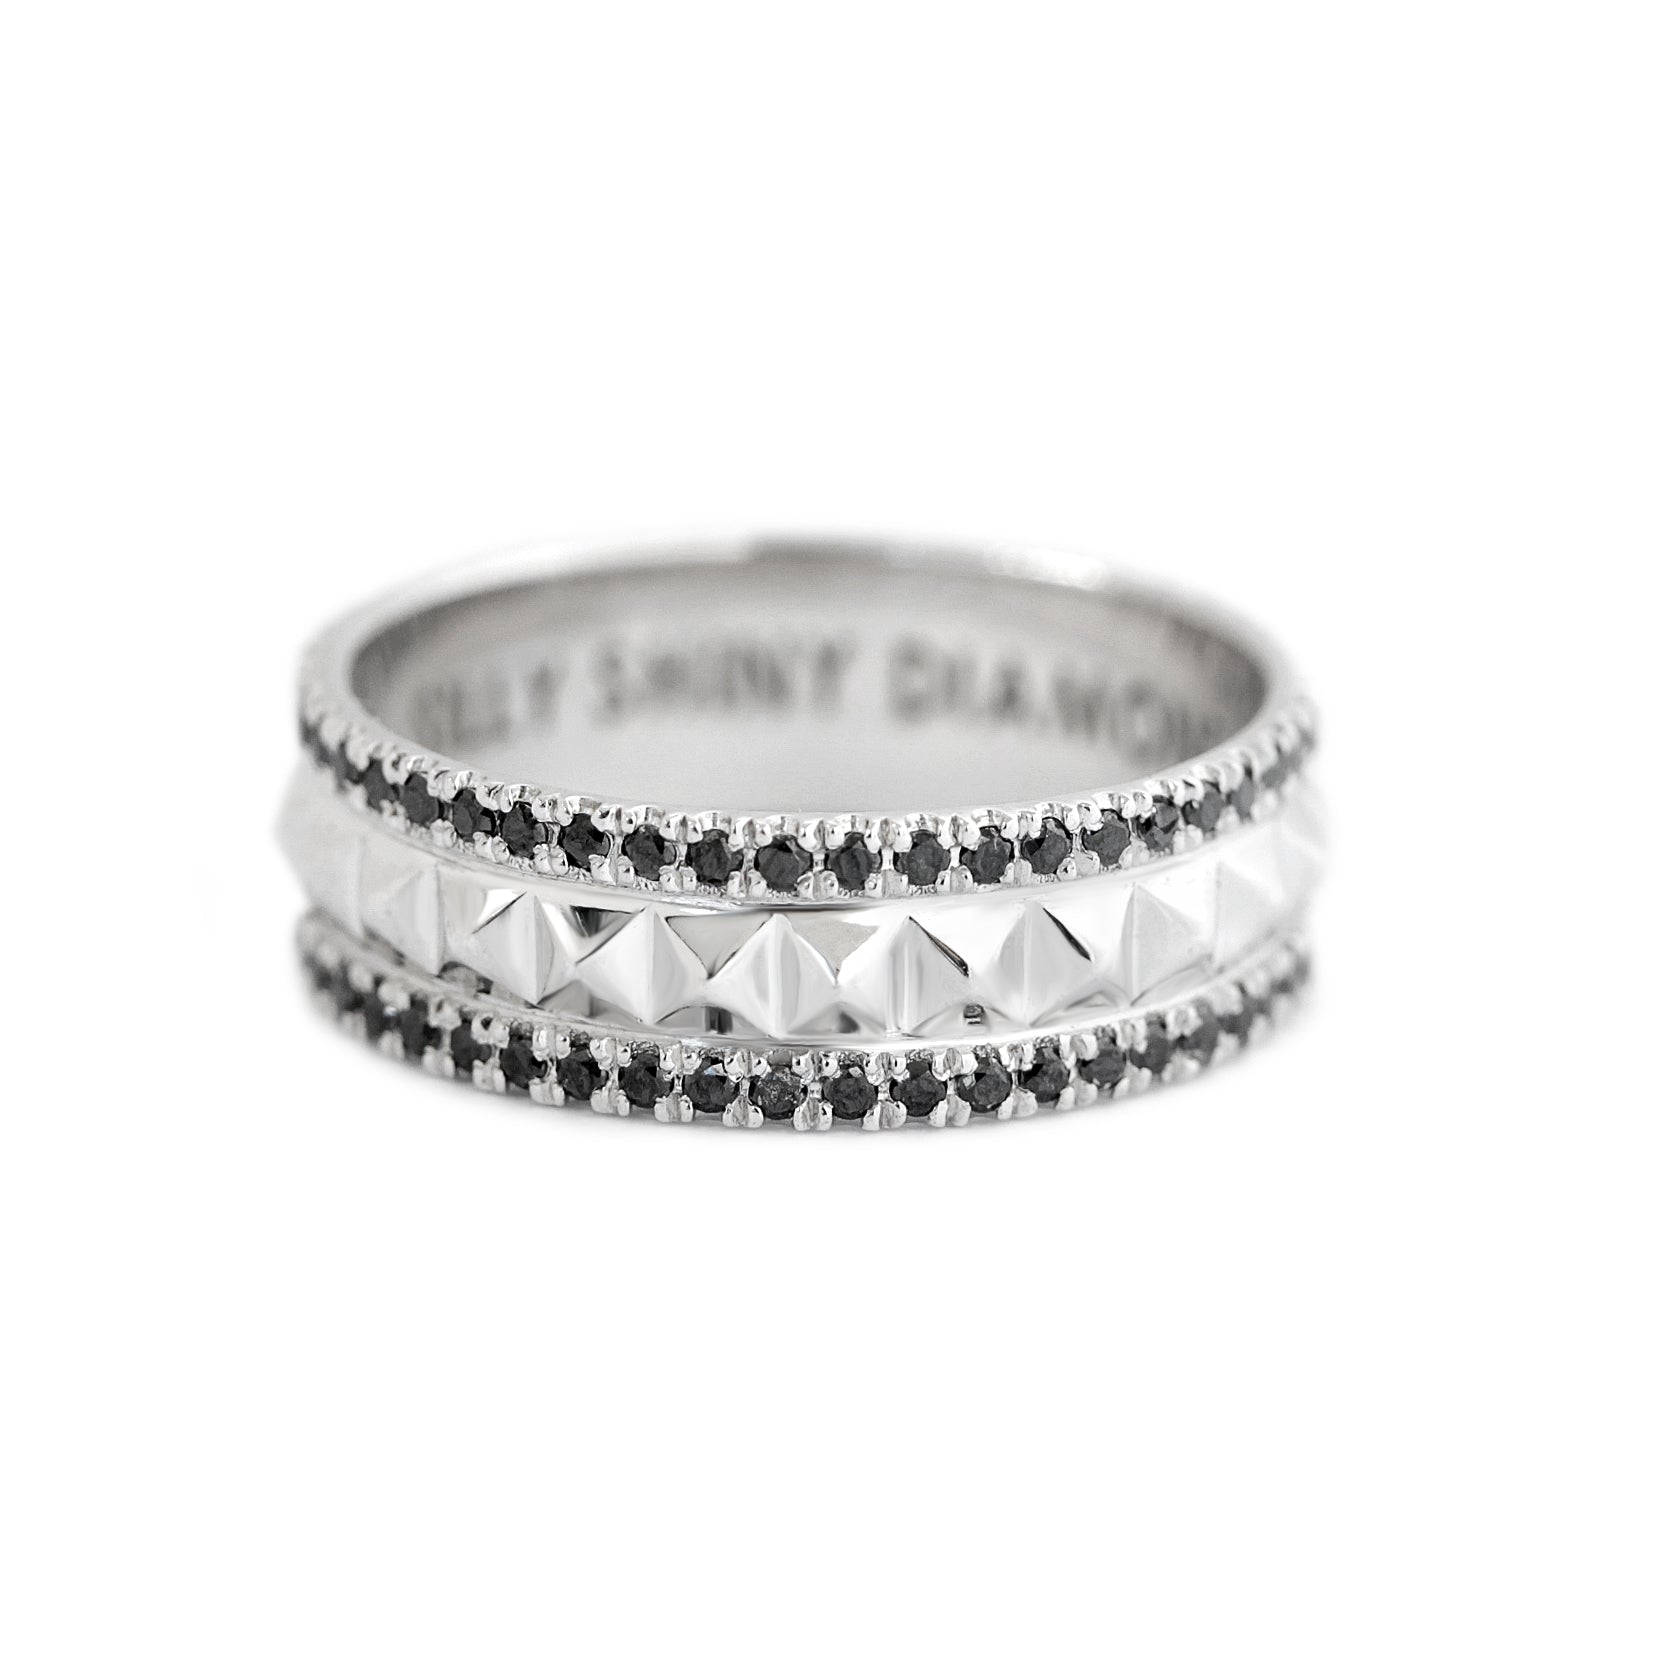 Double black diamonds eternity pyramid wedding ring, 14K White Gold, Size 5.5, READY TO SHIP! ♥